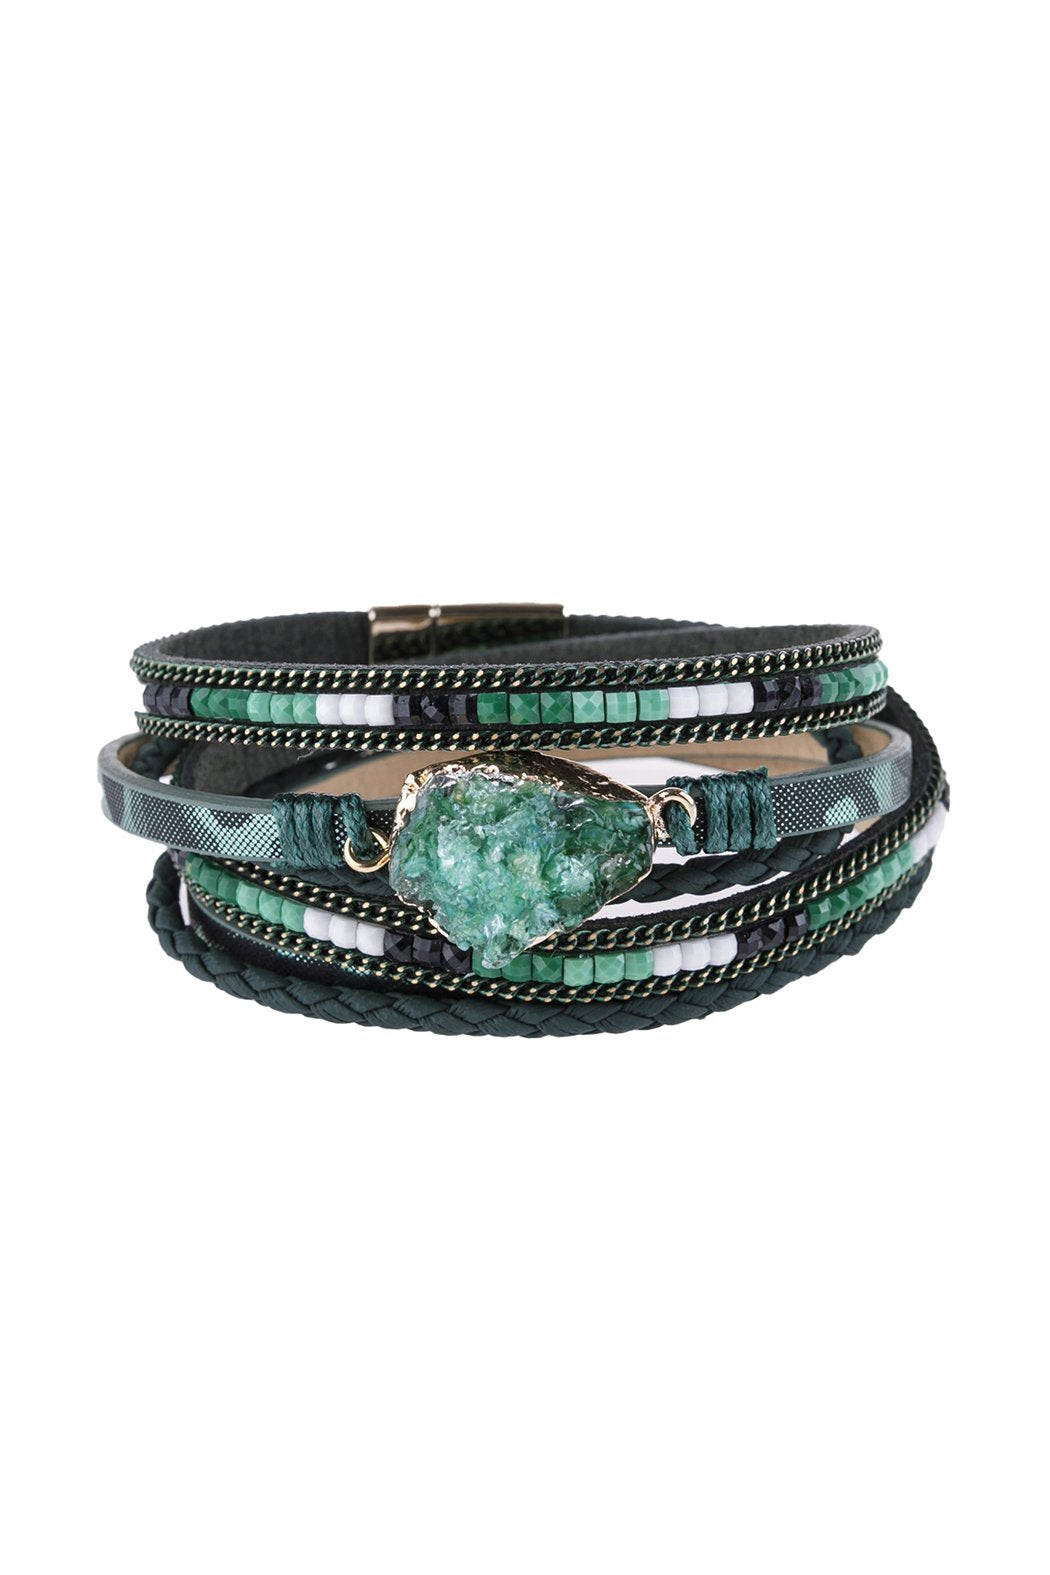 Hdb2981 - Druzy Stone Leather Wrap Magnetic Bracelet - LOLA LUXE